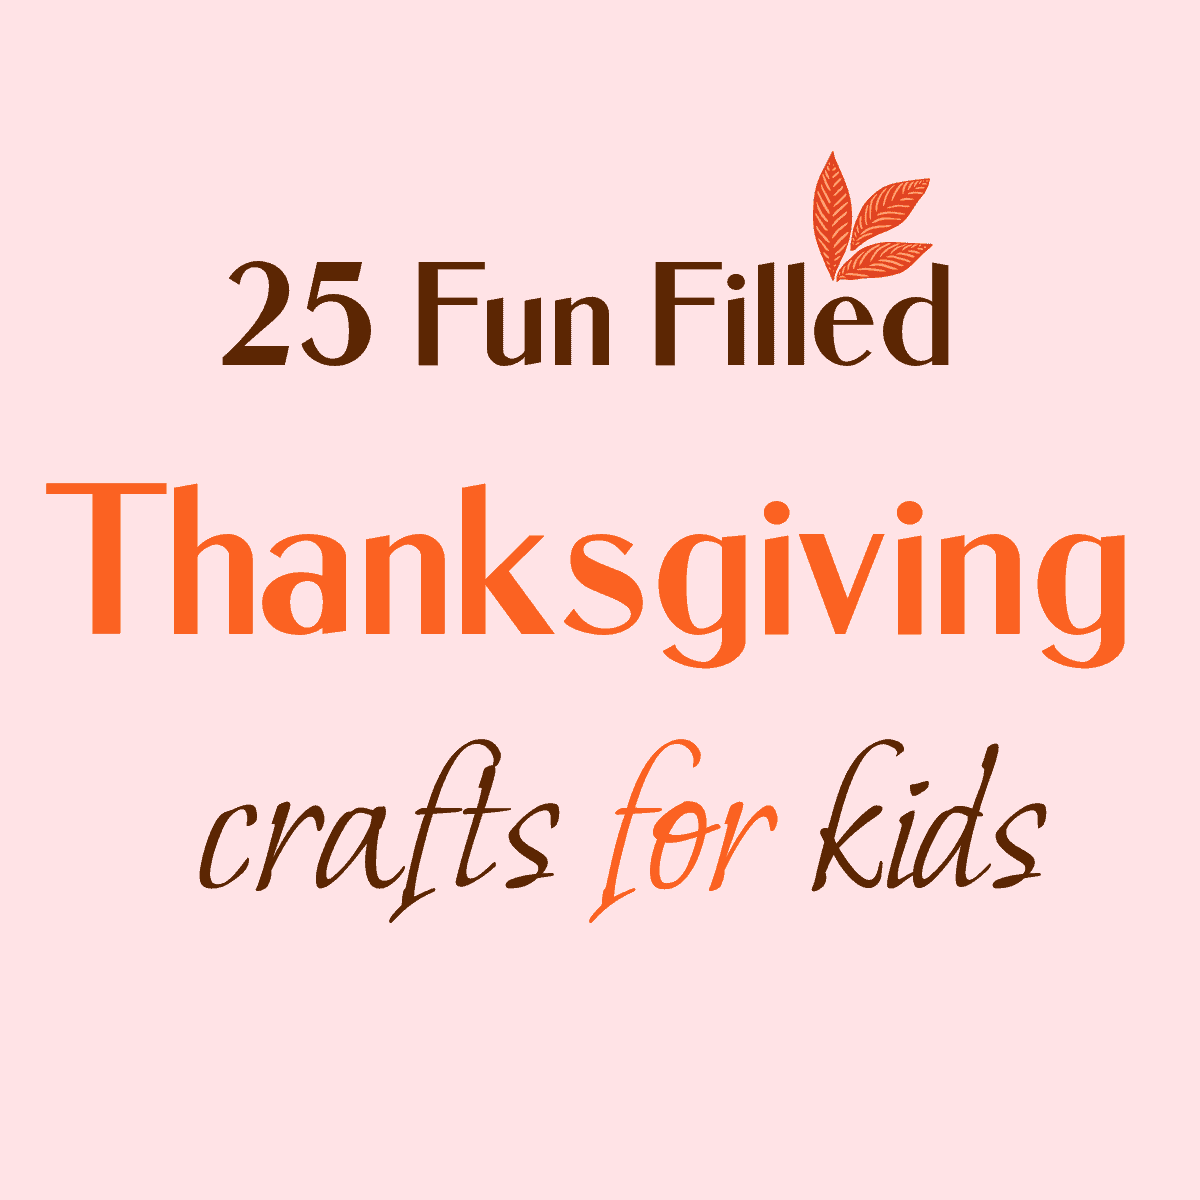 25 Fun Filled Thanksgiving Crafts For Kids 2015